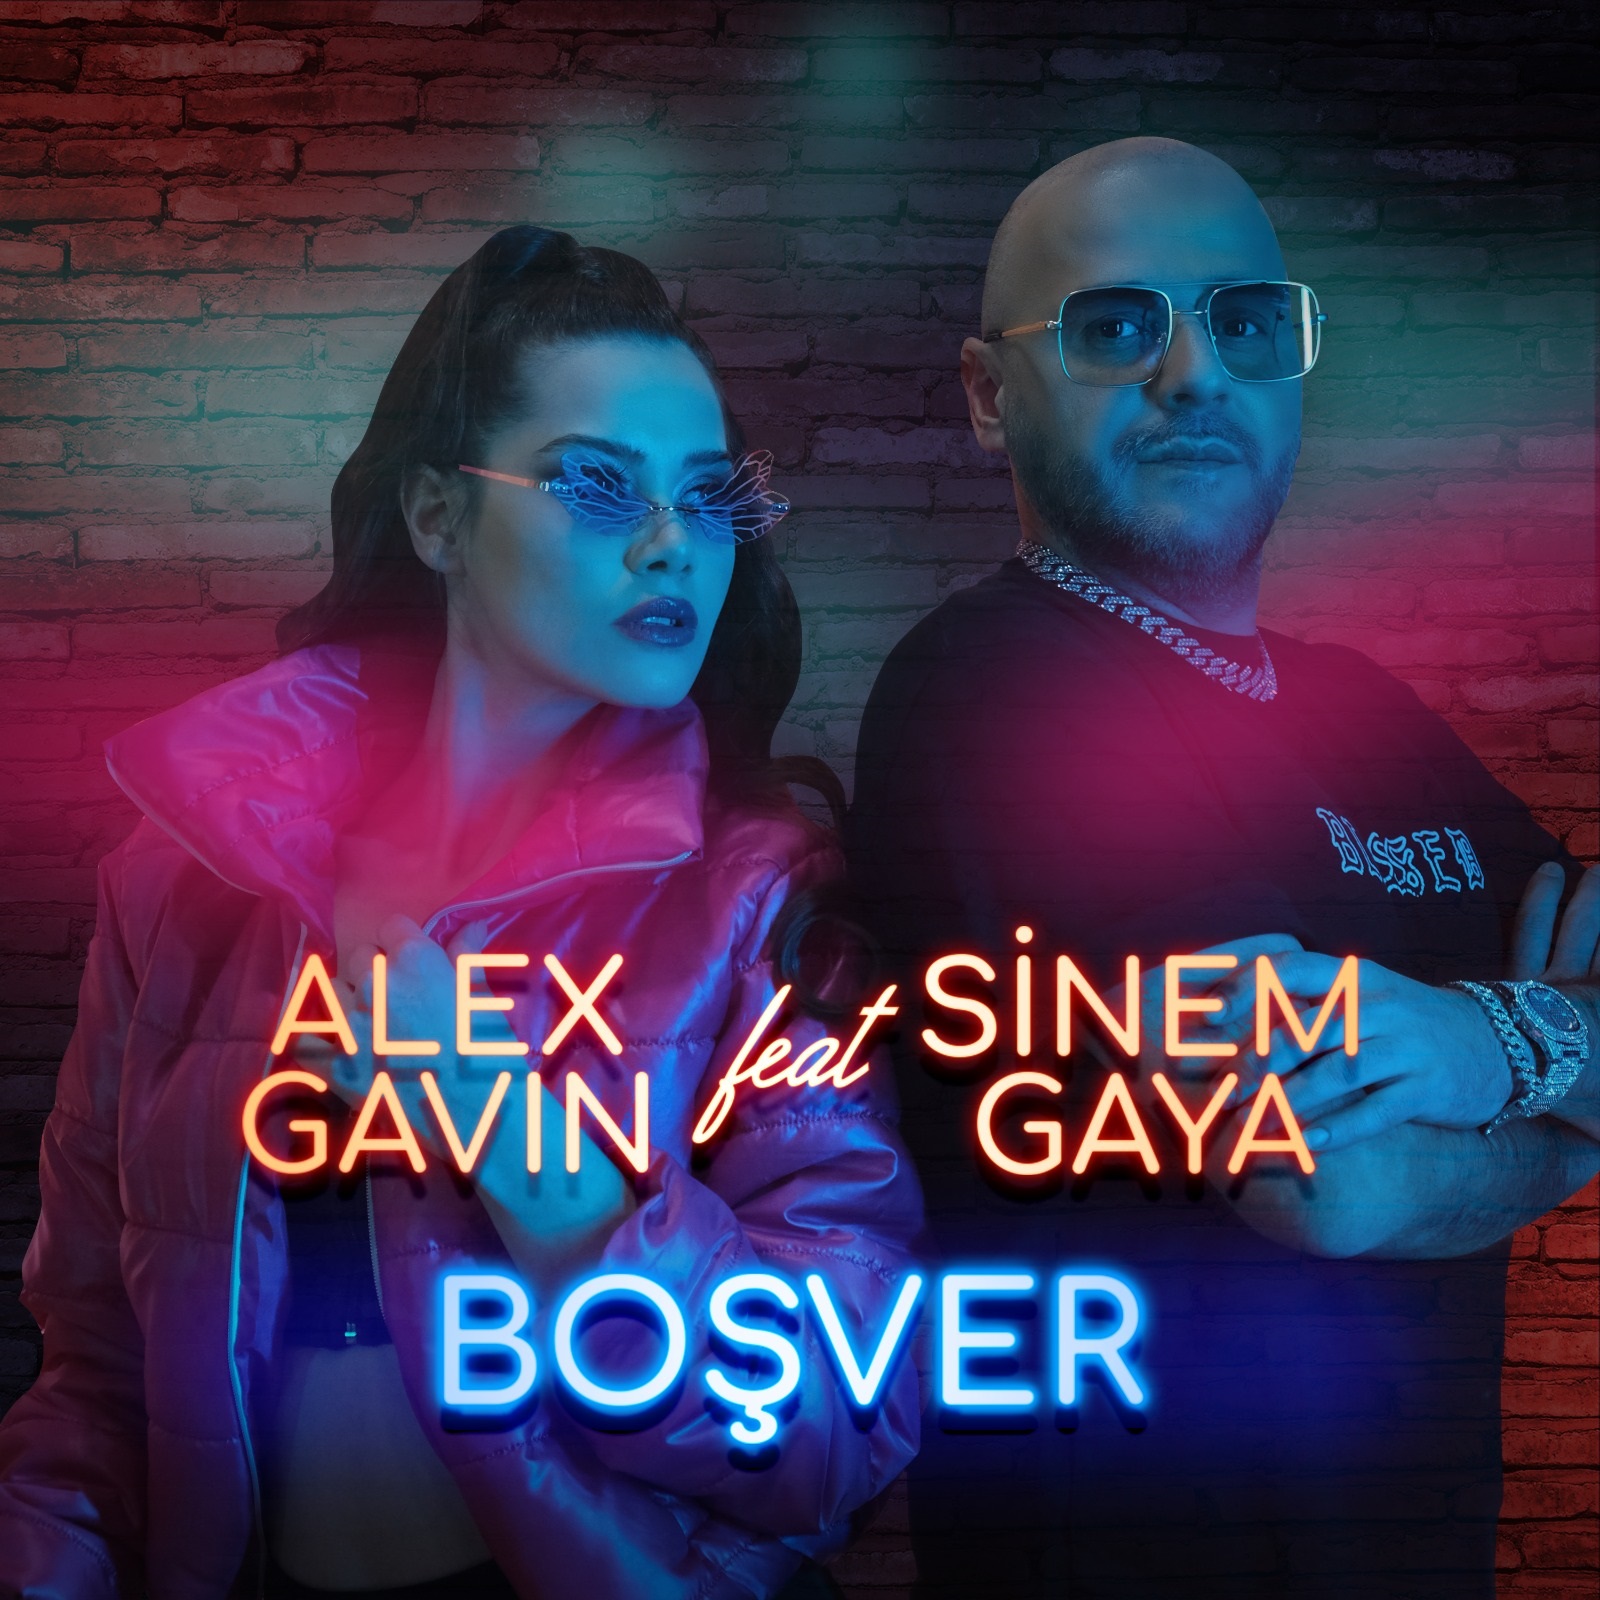 Alex Gavin feat Sinem Gaya